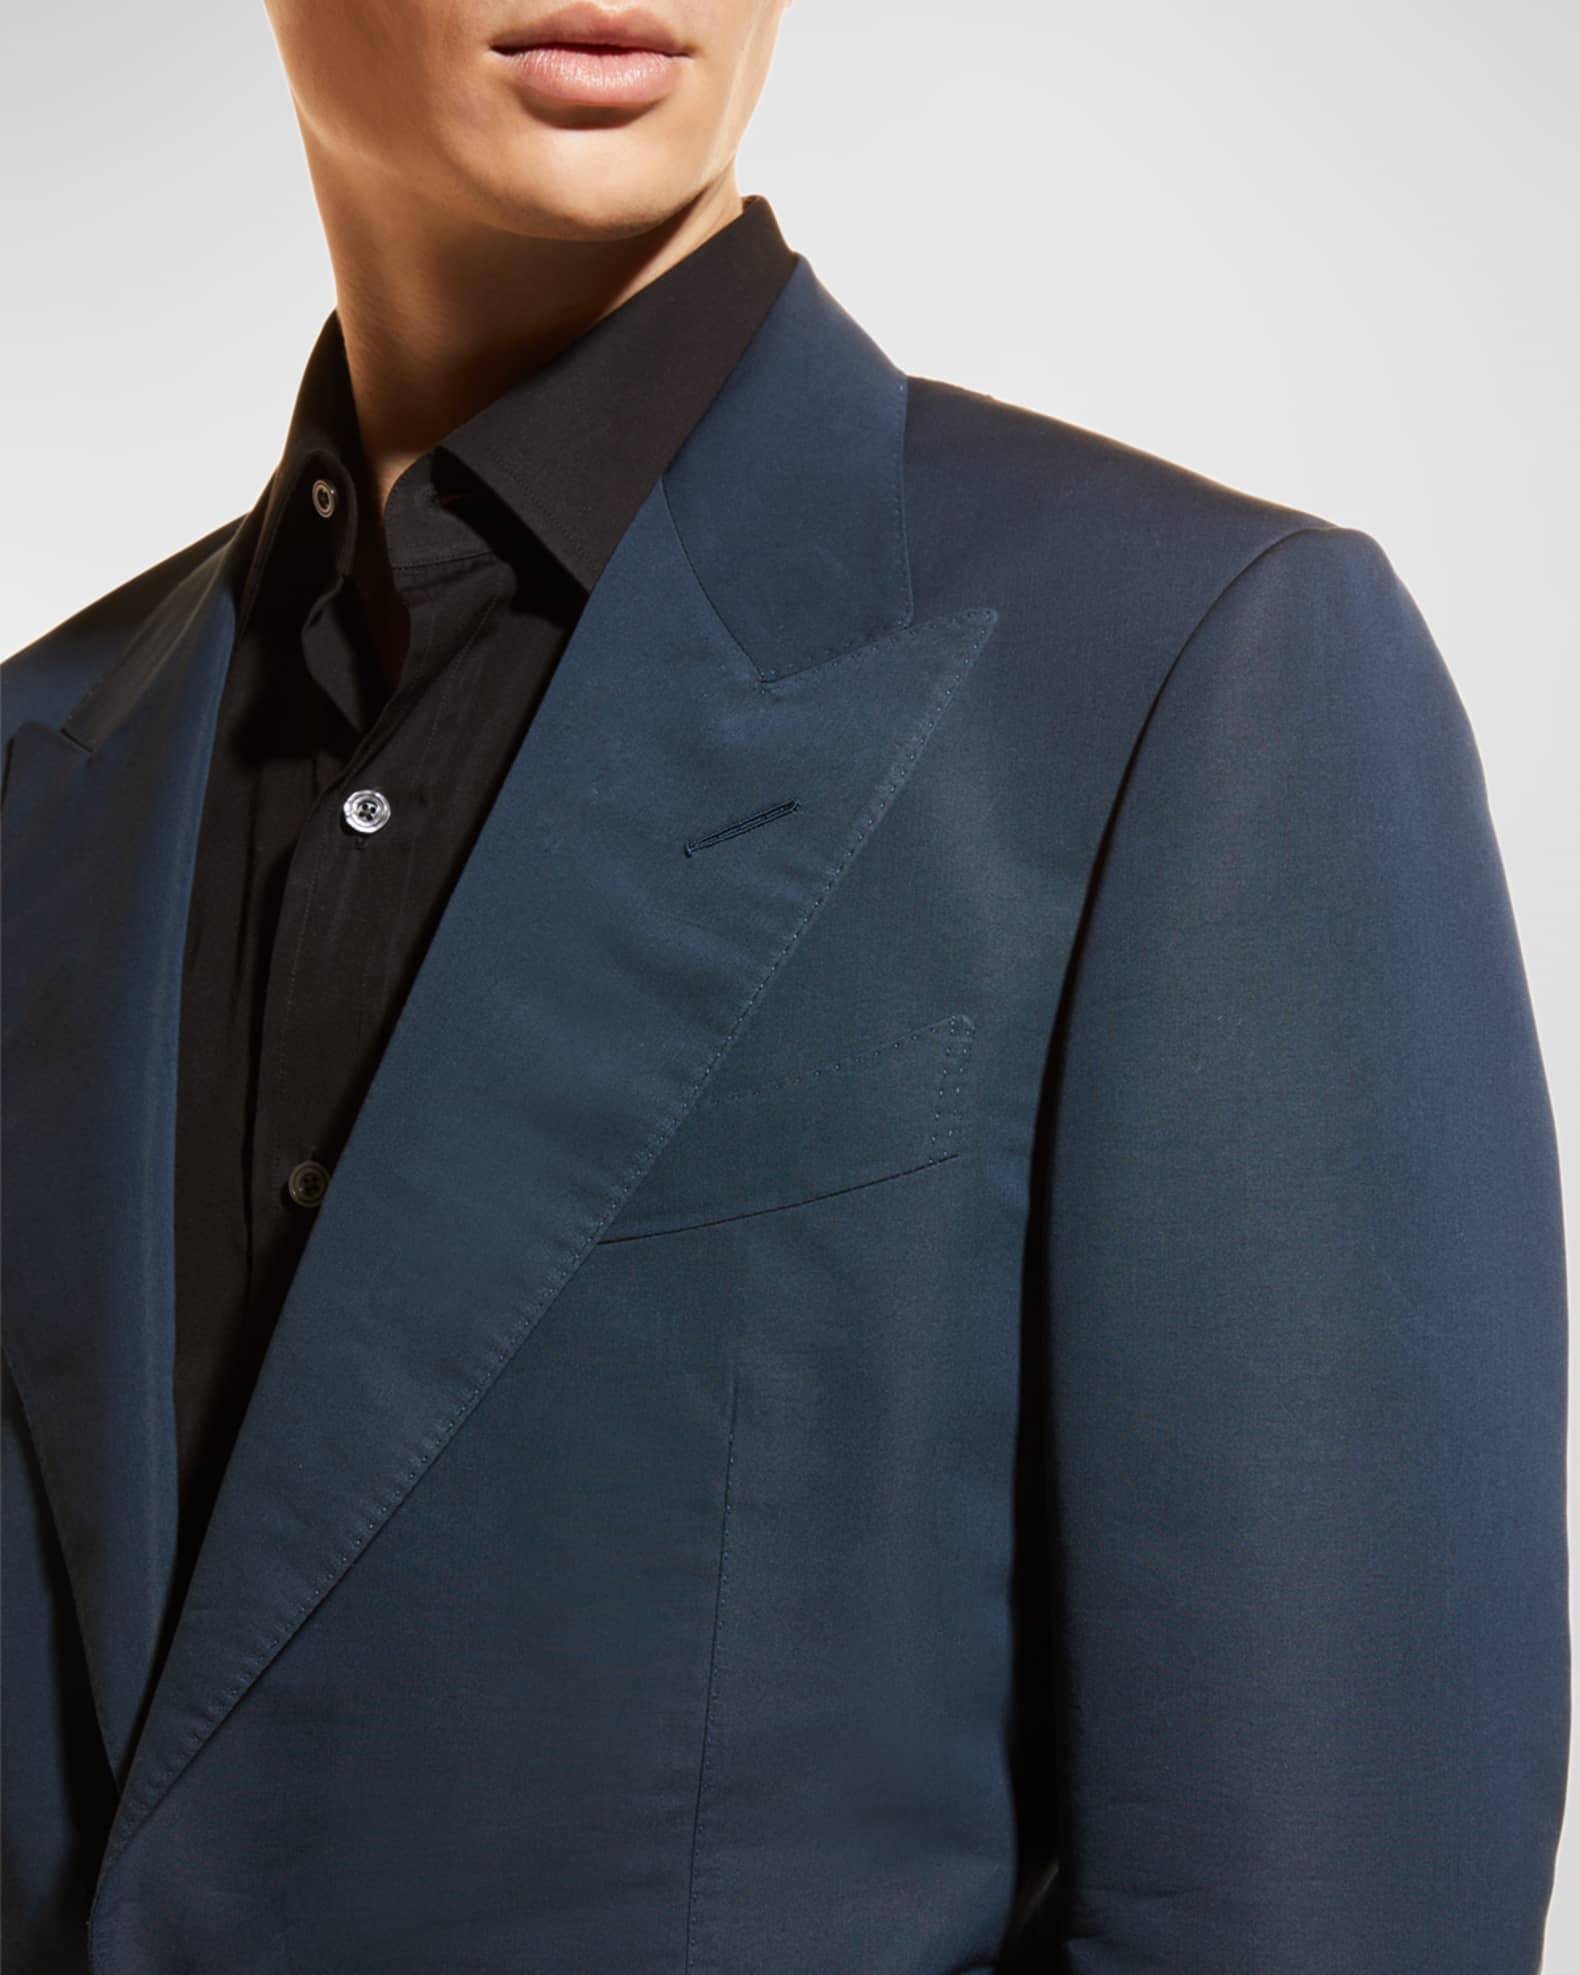 TOM FORD Men's Shelton Piece-Dyed Poplin Suit | Neiman Marcus